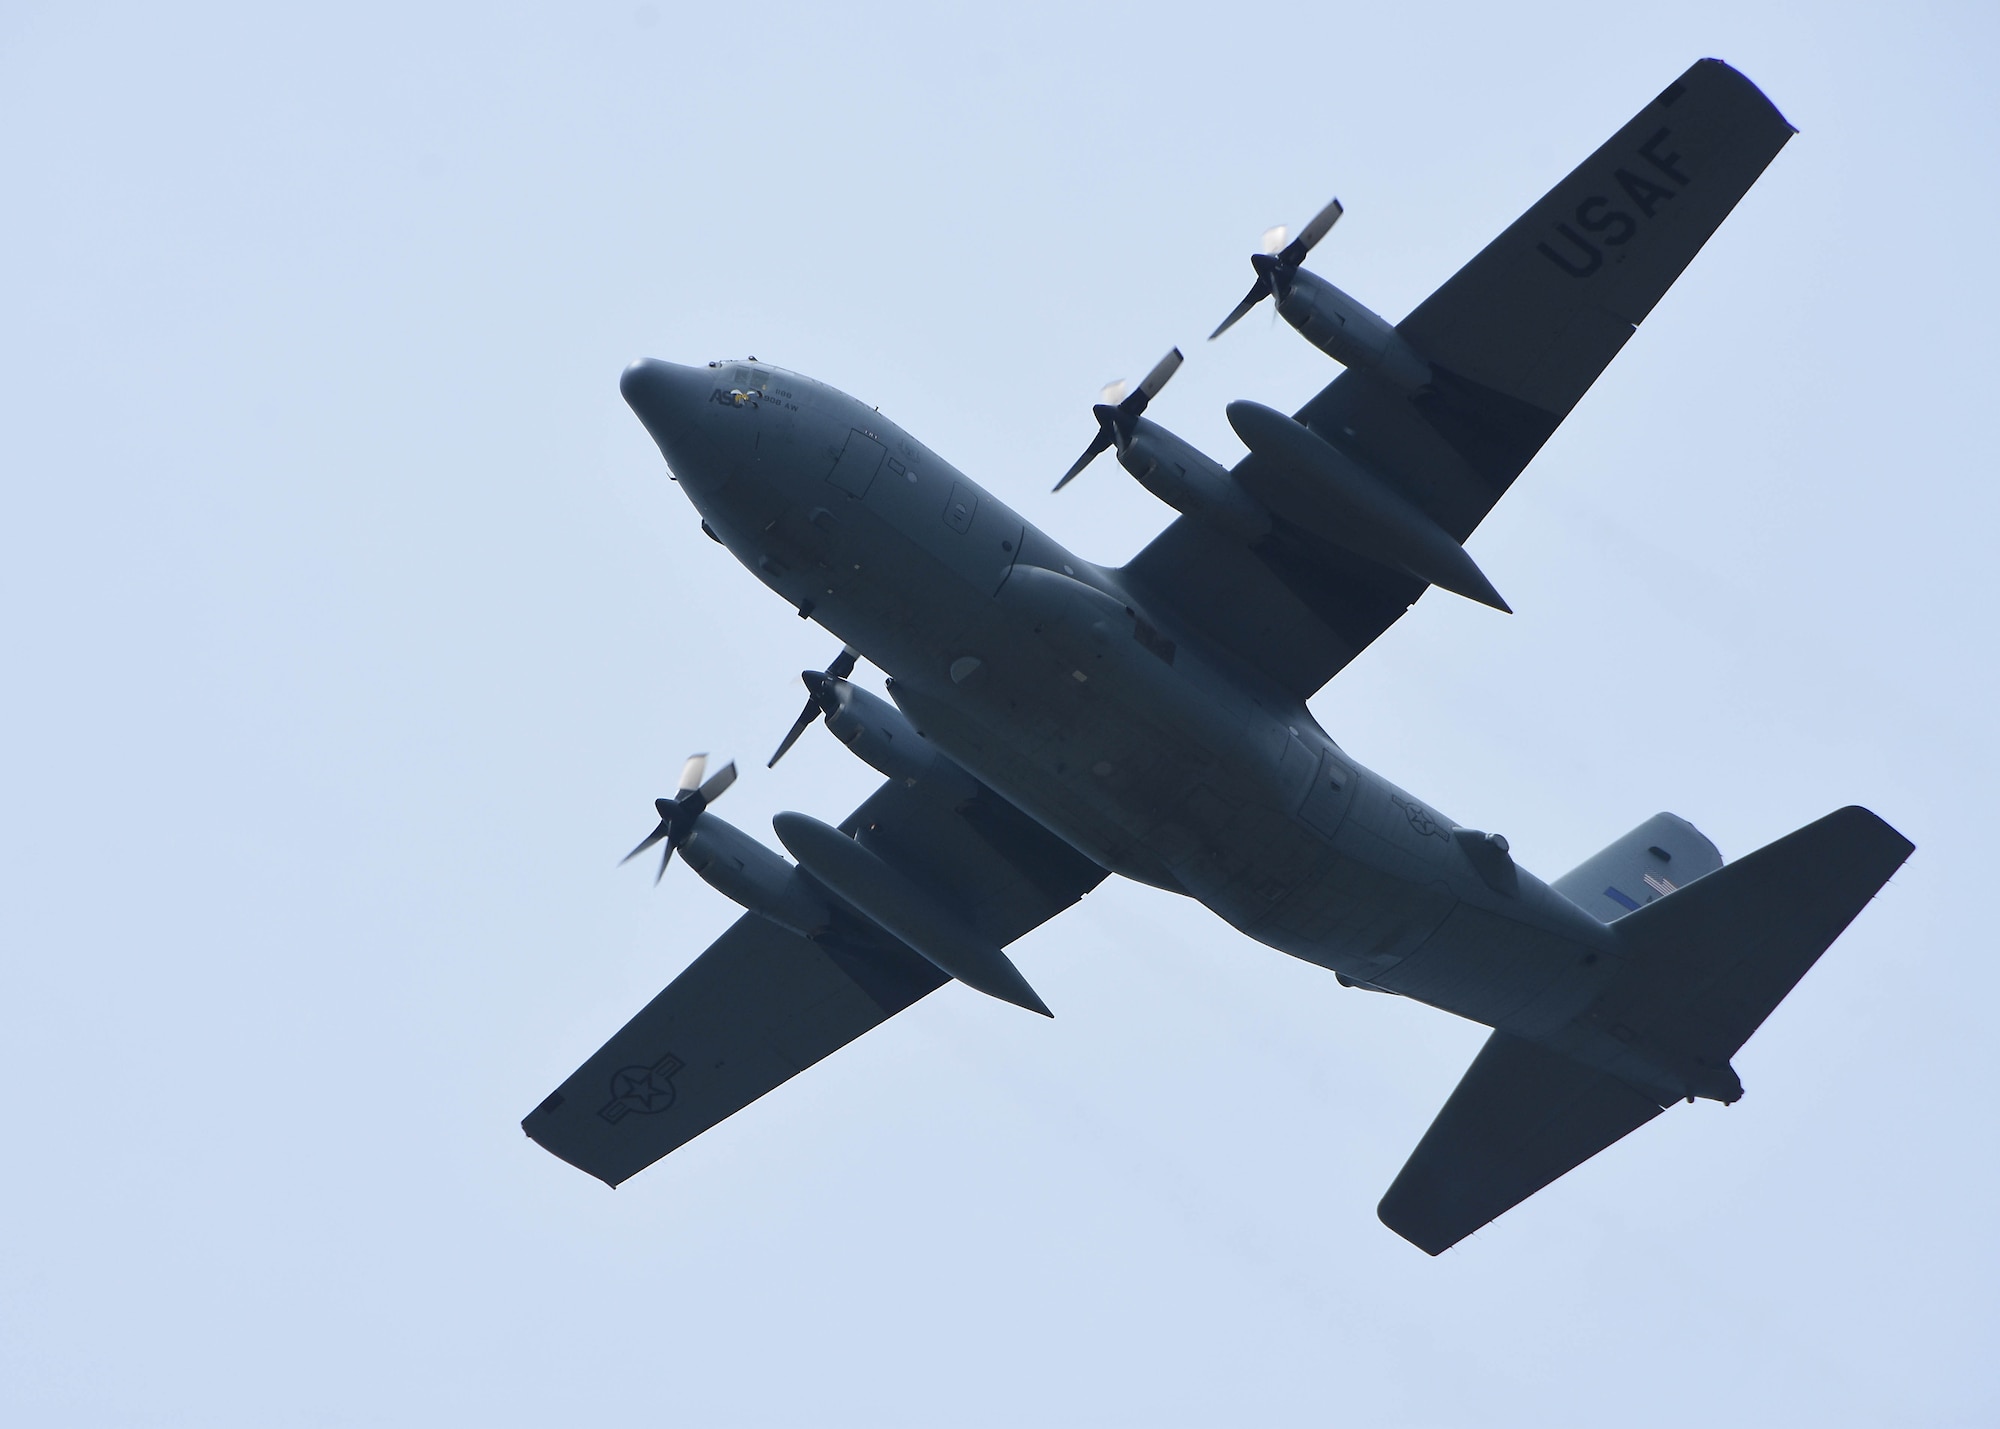 C-130 flies over stadium